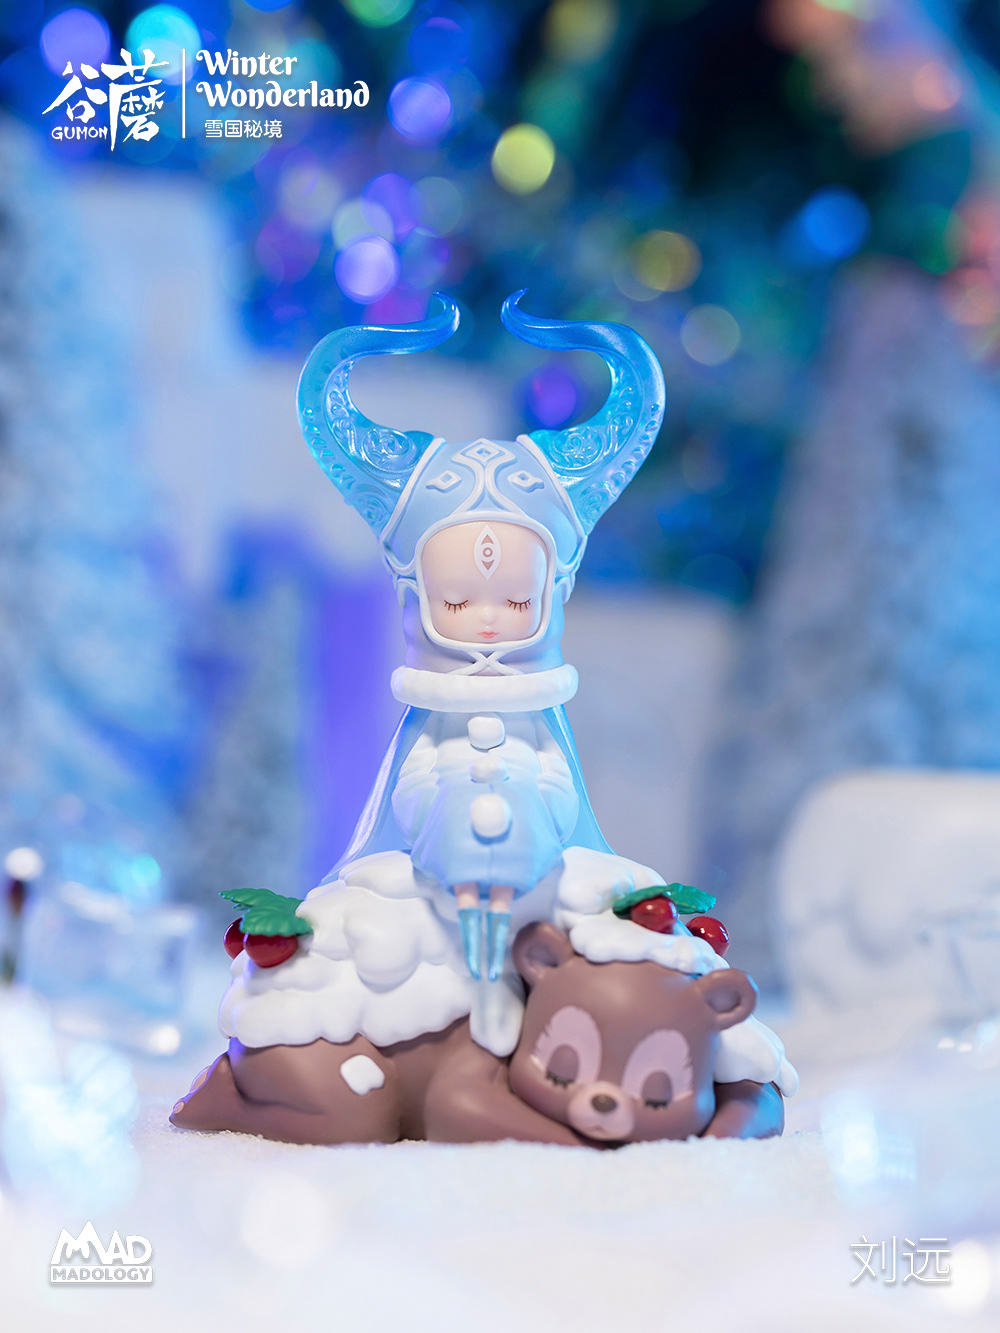 Image may contain: cartoon, snowman and birthday cake